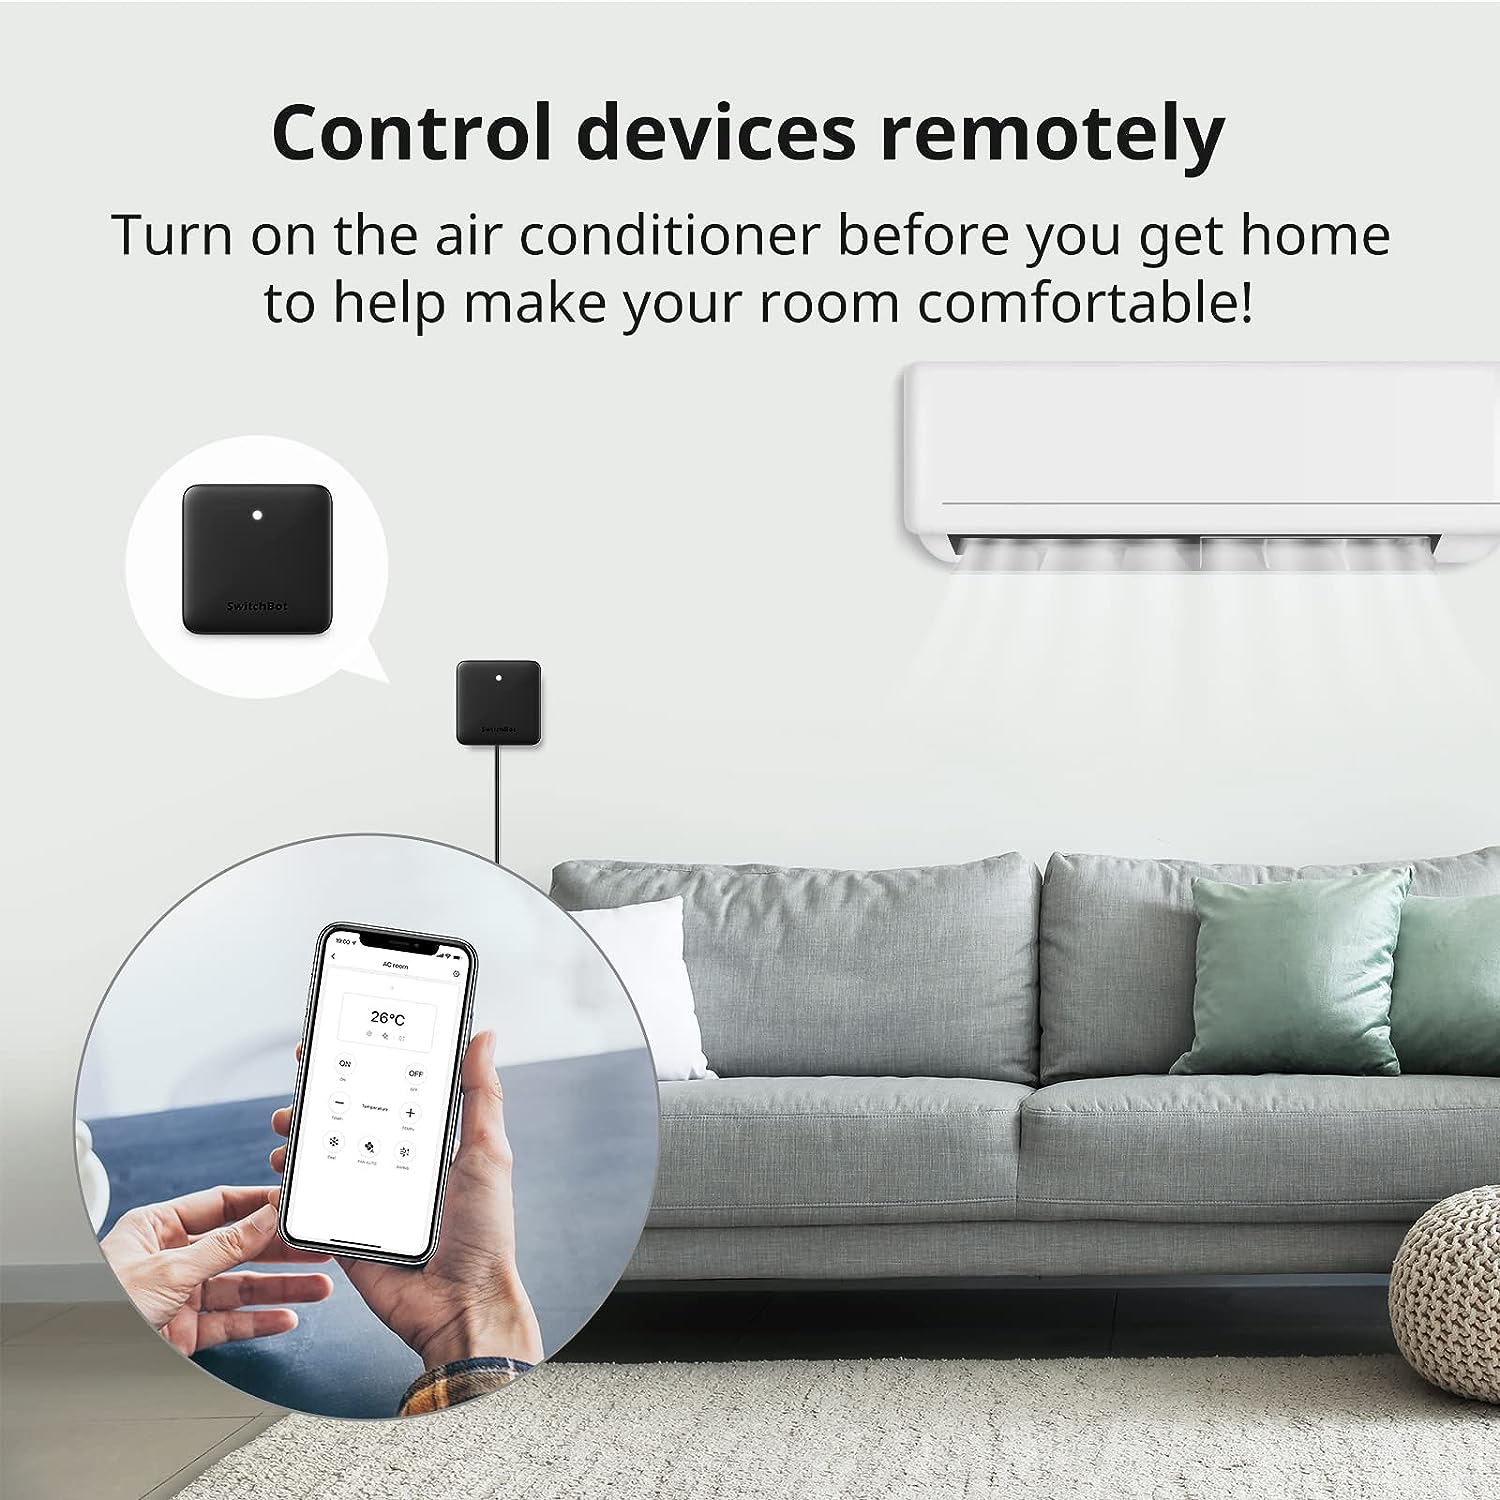 SwitchBot Hub Mini Smart Home Remote Control